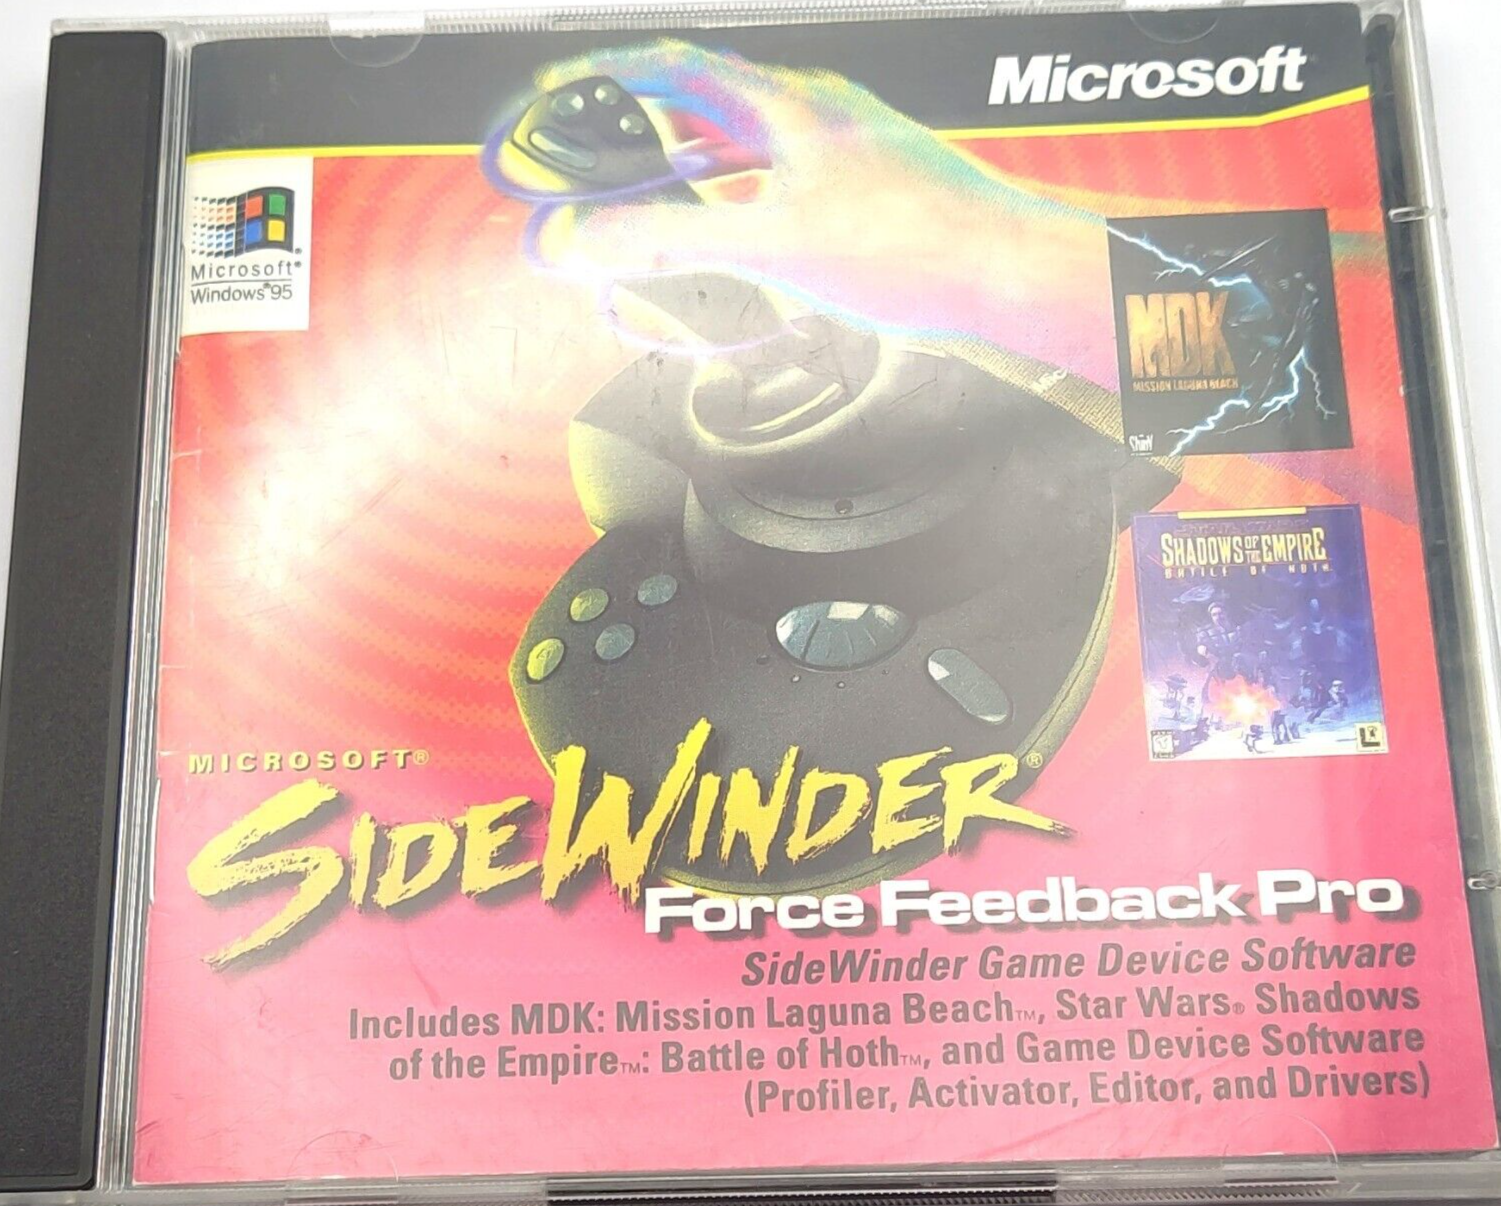 Microsoft SideWinder Force Feedback Pro Joystick Software 2 Disc Set + 3 Games - $34.60